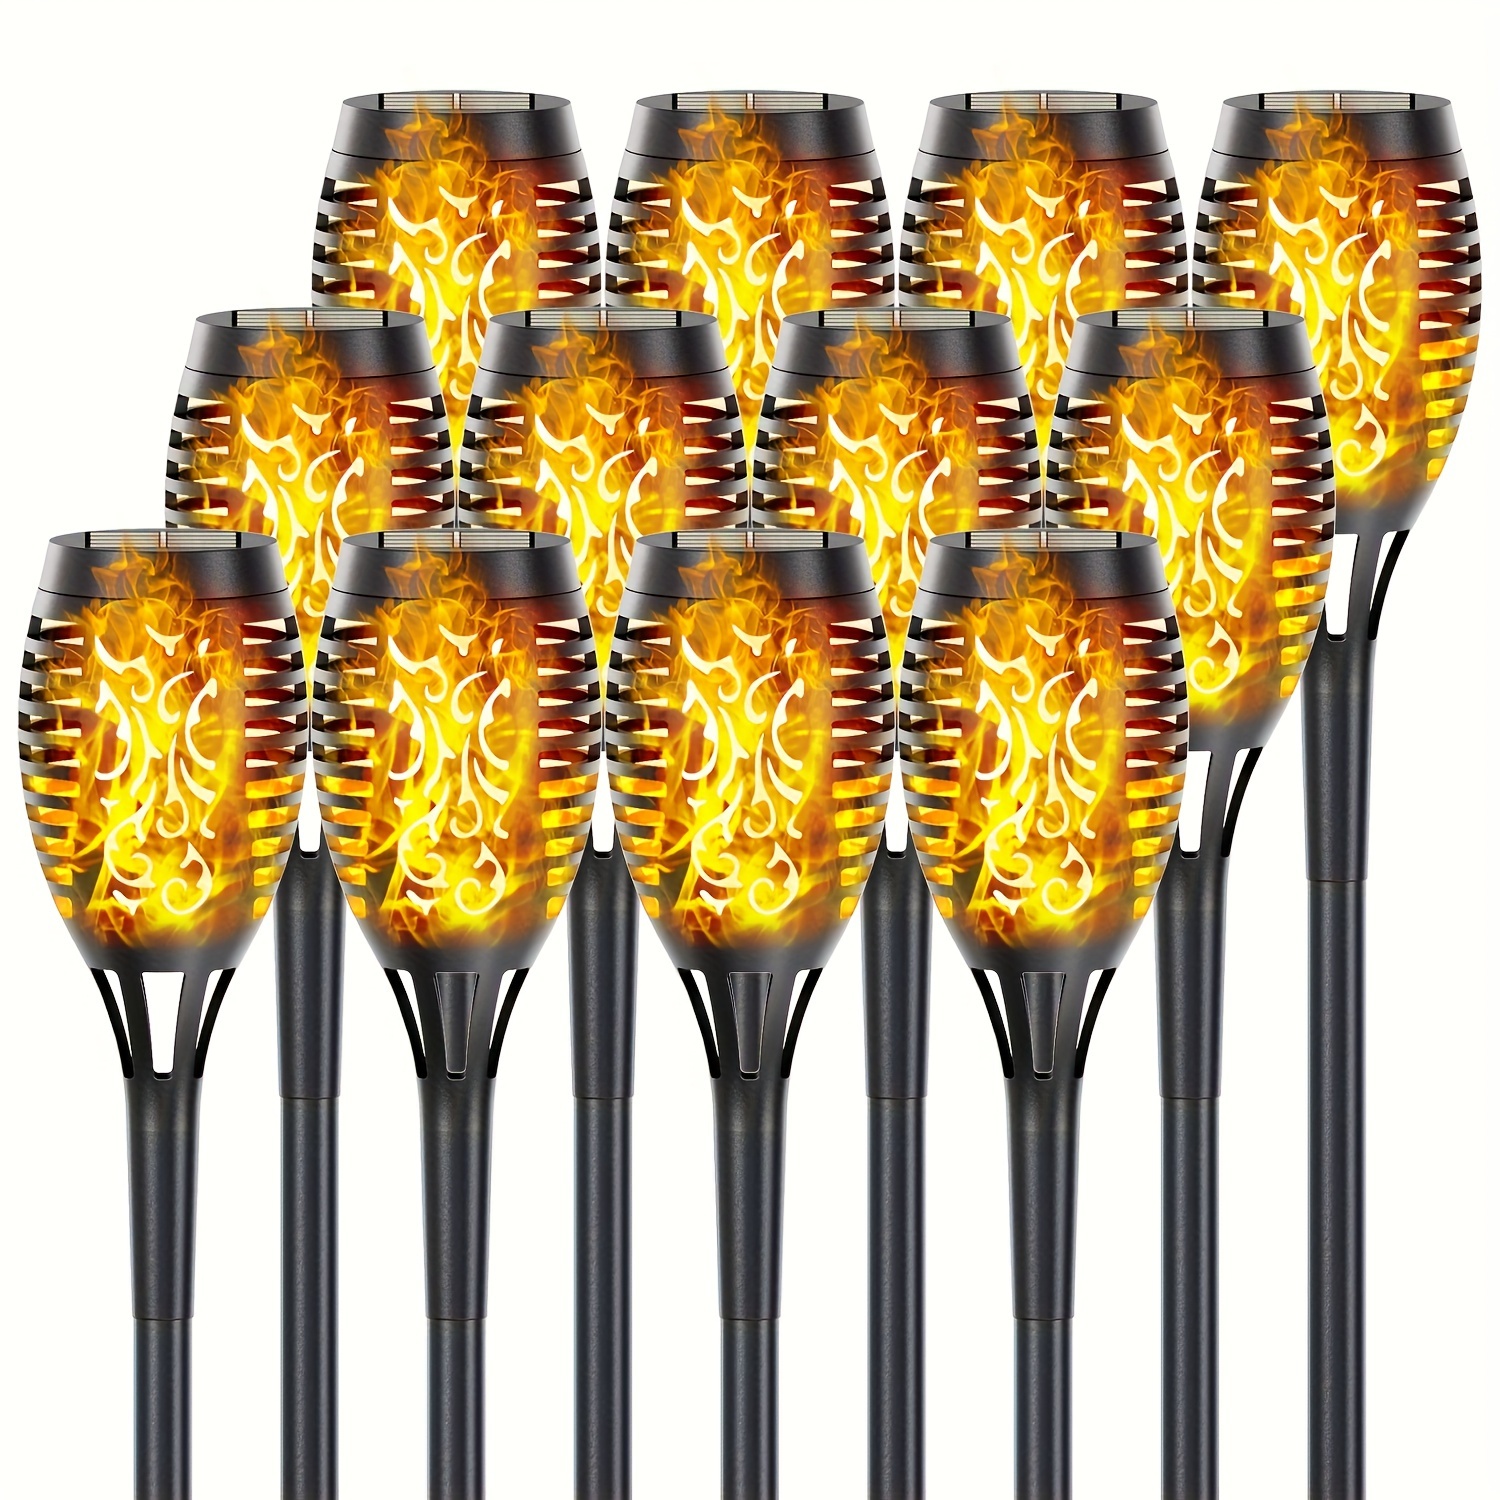 

Solar-powered Flame Lights 4/8/12 Piece - Flickering Fire Effect For Garden, Patio & Pool Decor | Auto On/off, Outdoor Halloween Lighting Patio Lights Outdoor Lighting